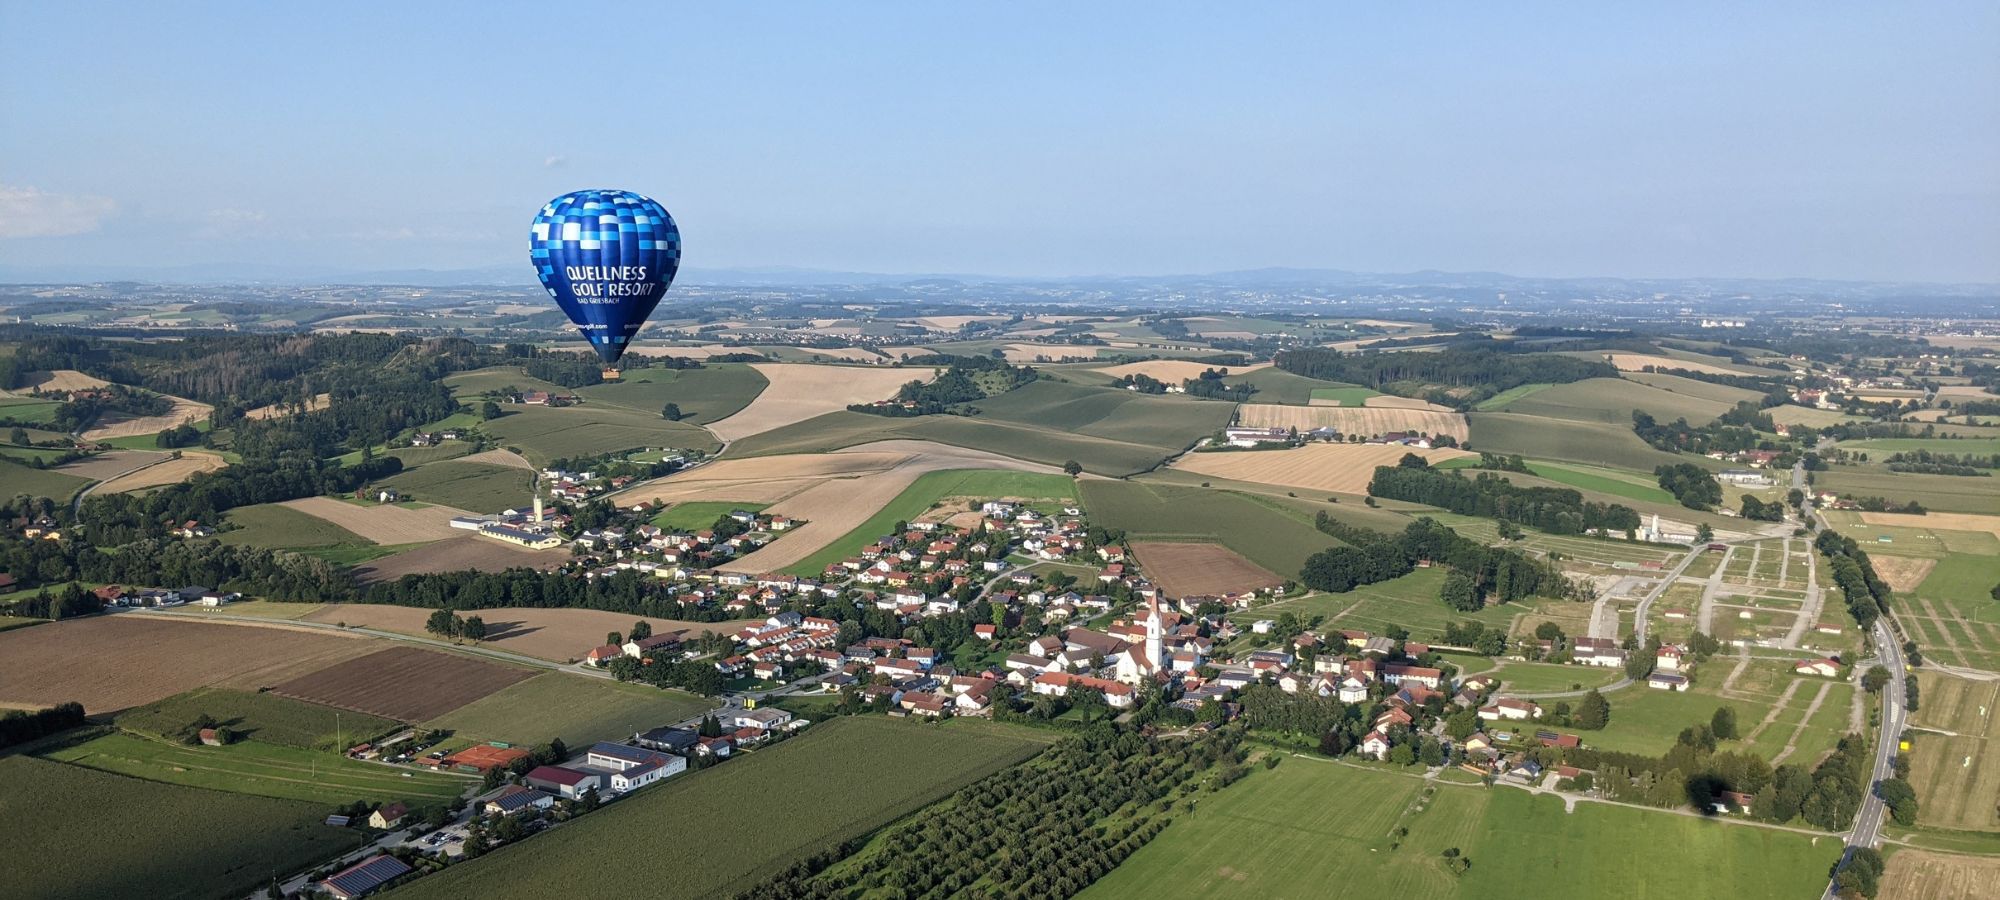 Ballonfahrt über das Rottaler Bäderdreieck | Bad Griesbach